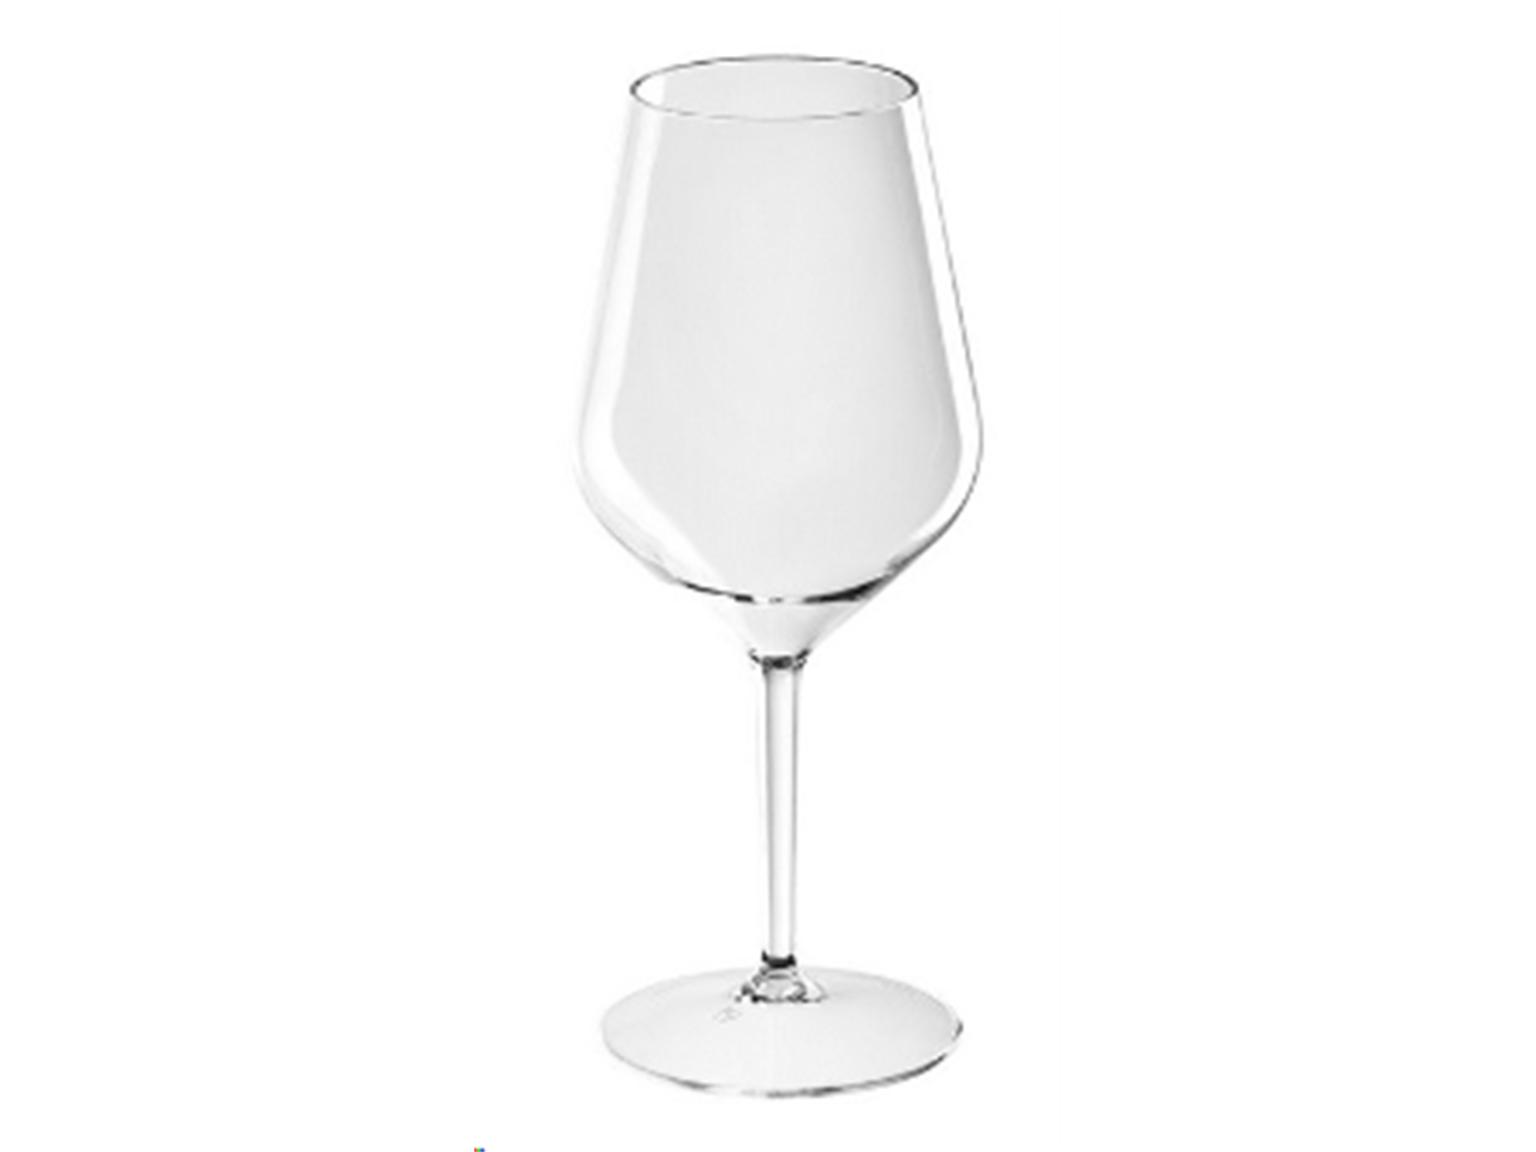 Weinglas Mehrweg, 4,7 dl, transparent Eichung 1 dl